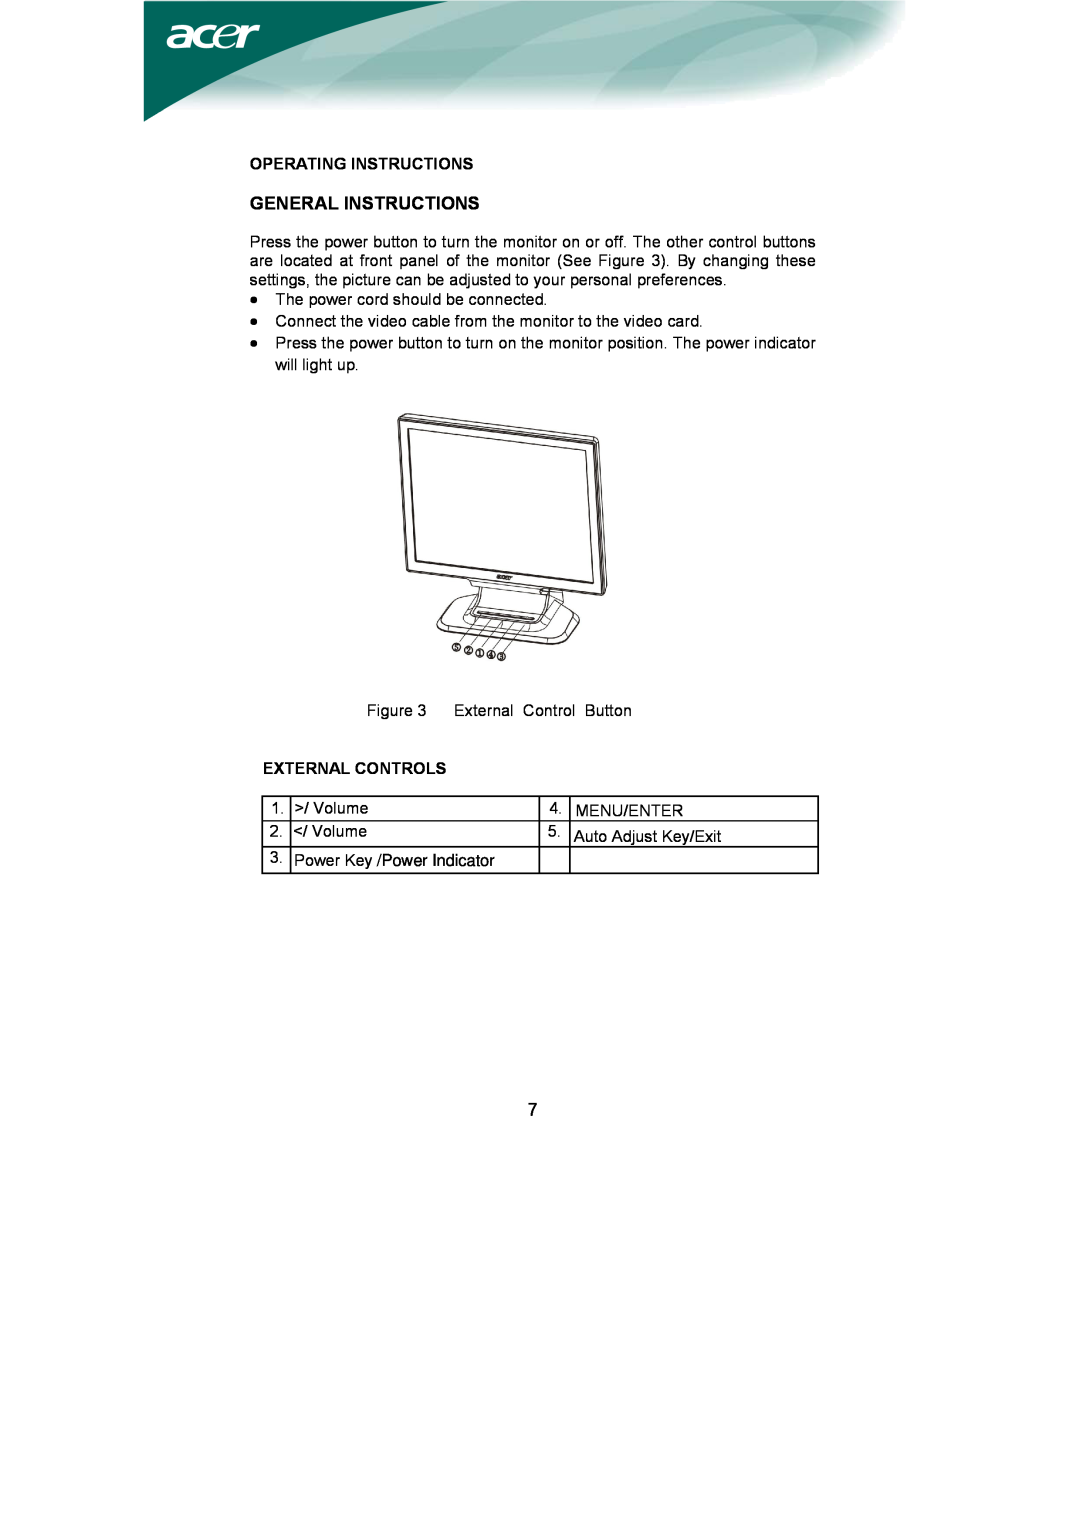 Acer AL1951 installation instructions General Instructions, Operating Instructions, External Controls 